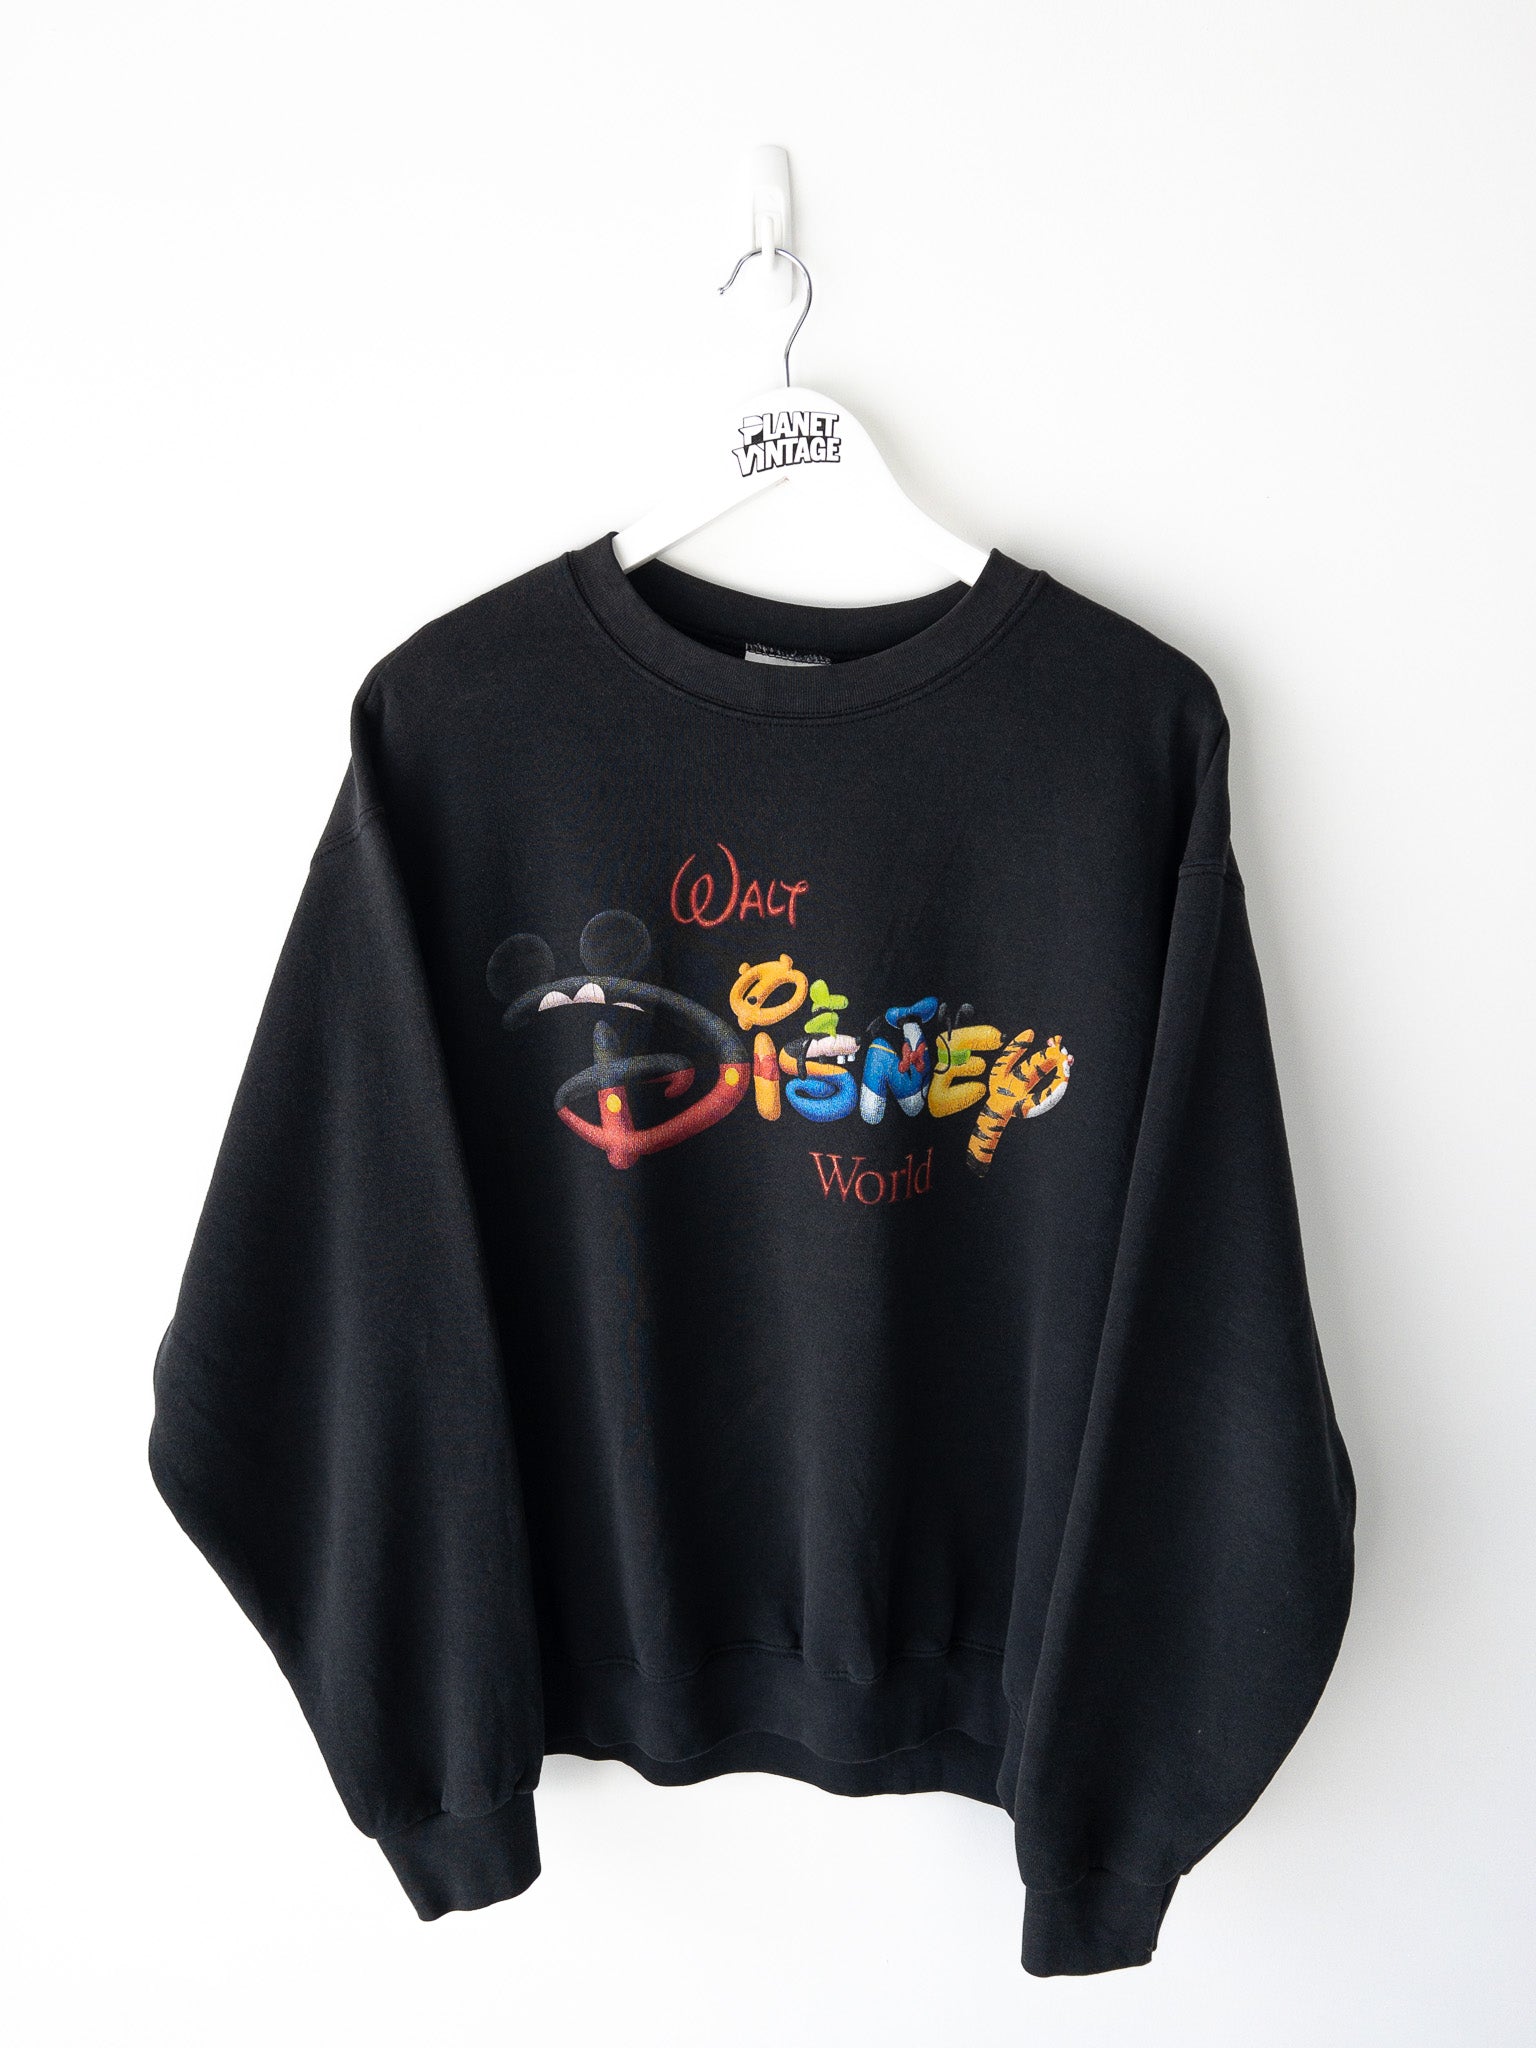 Vintage Walt Disney World Sweatshirt (L)